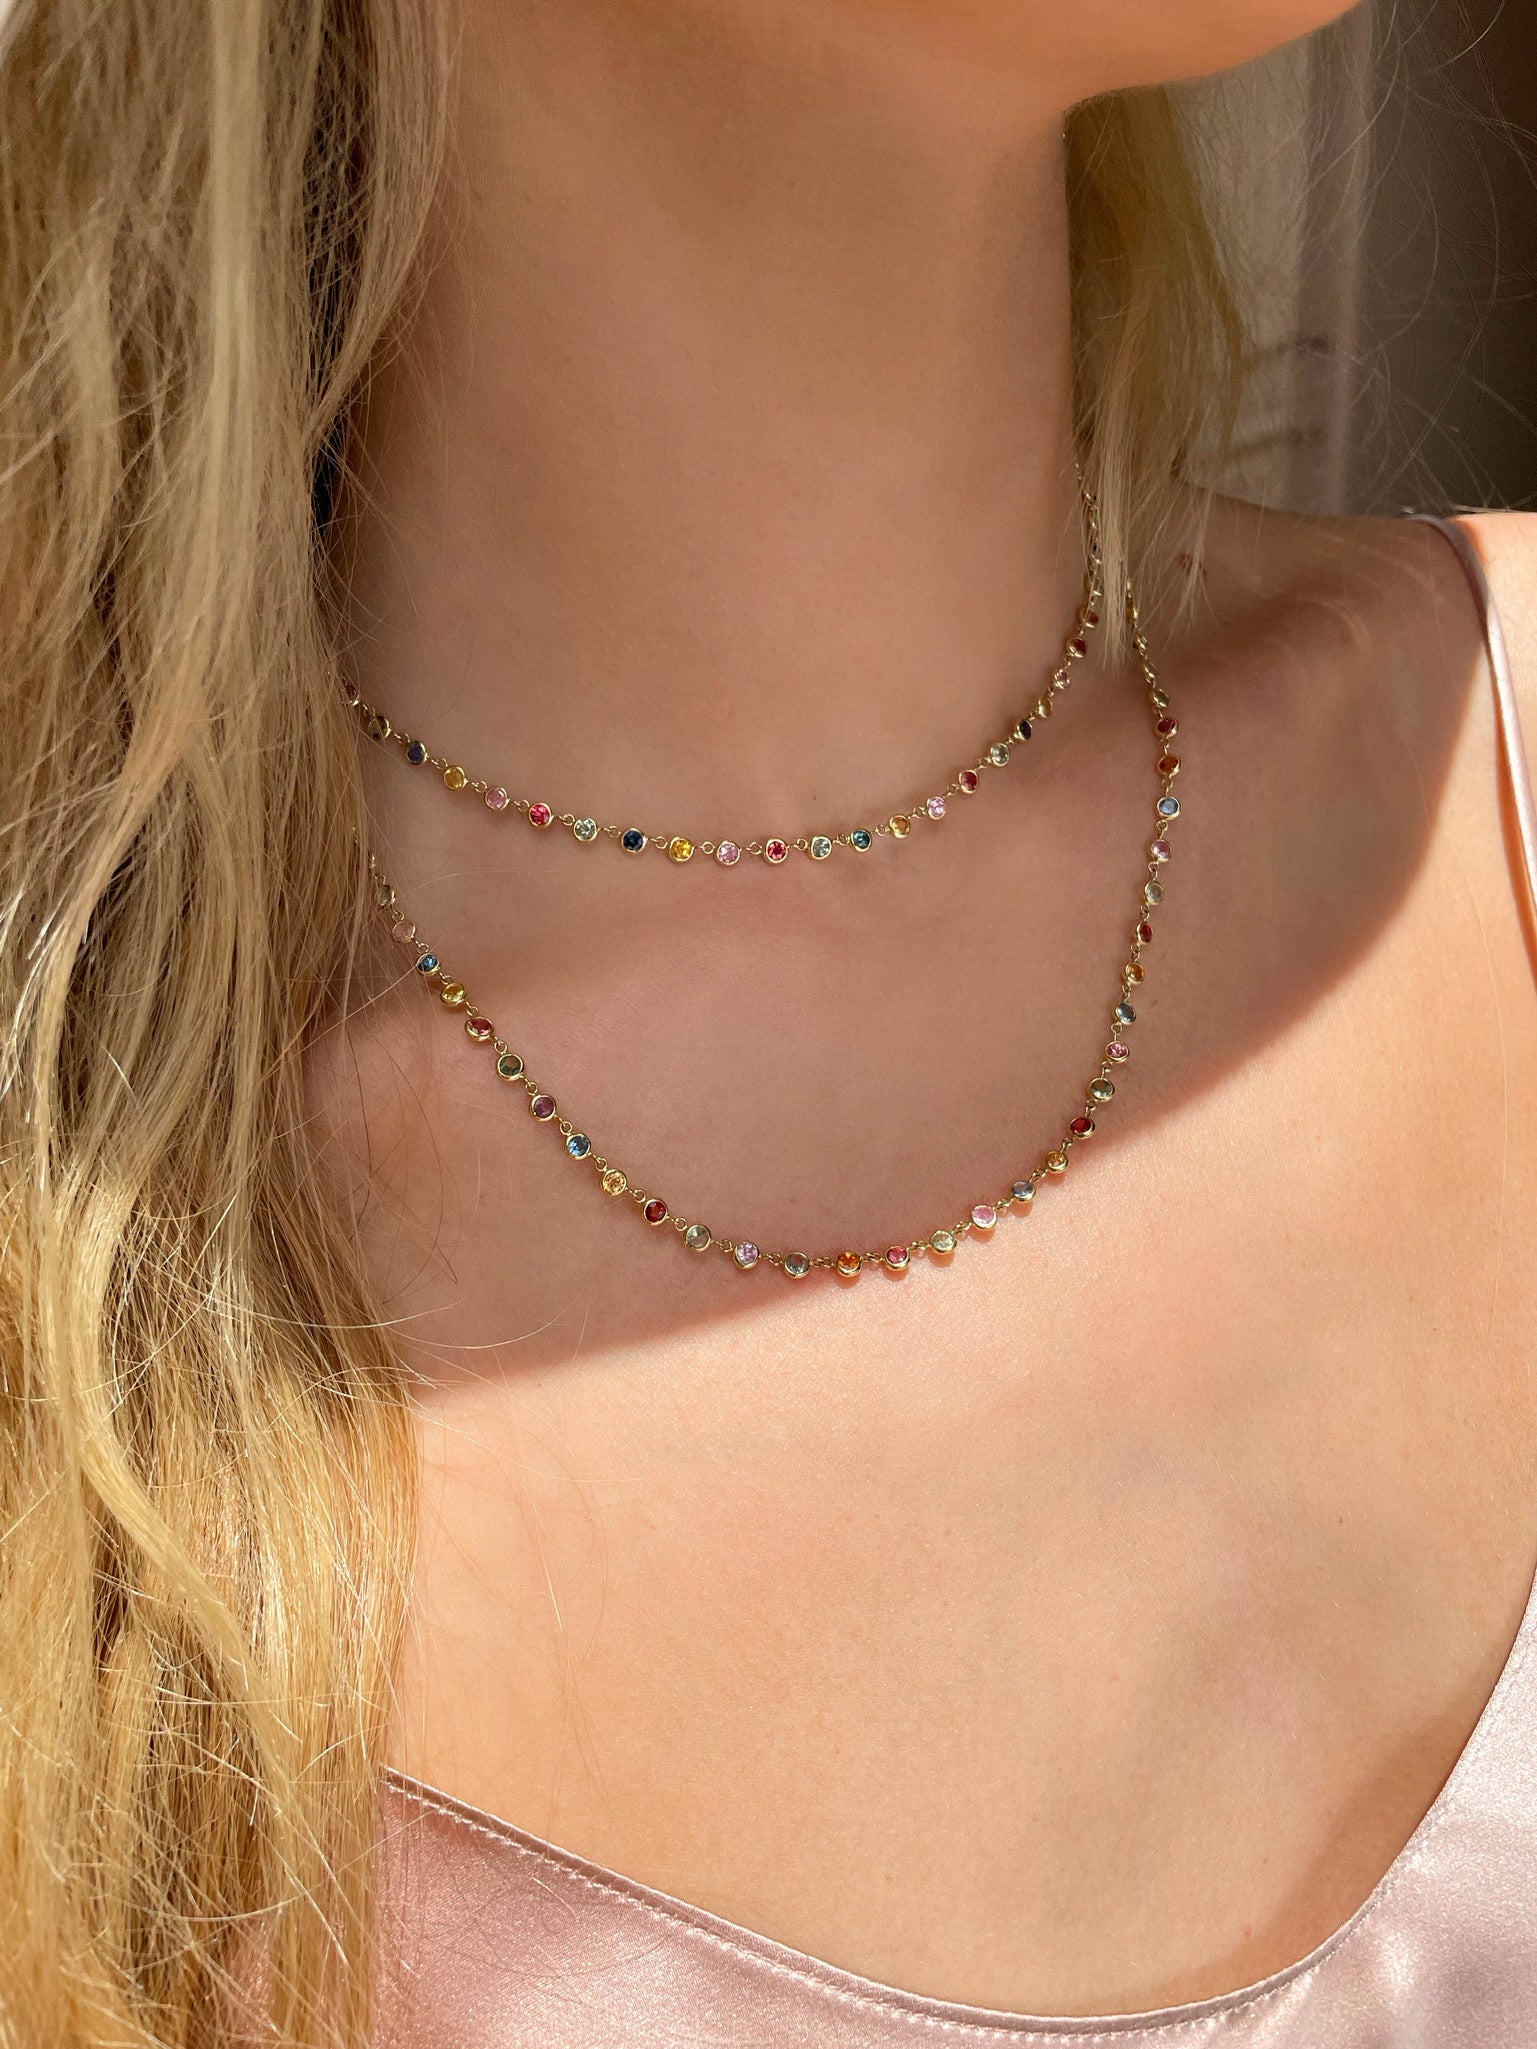 Multi-Color Sapphire Necklace